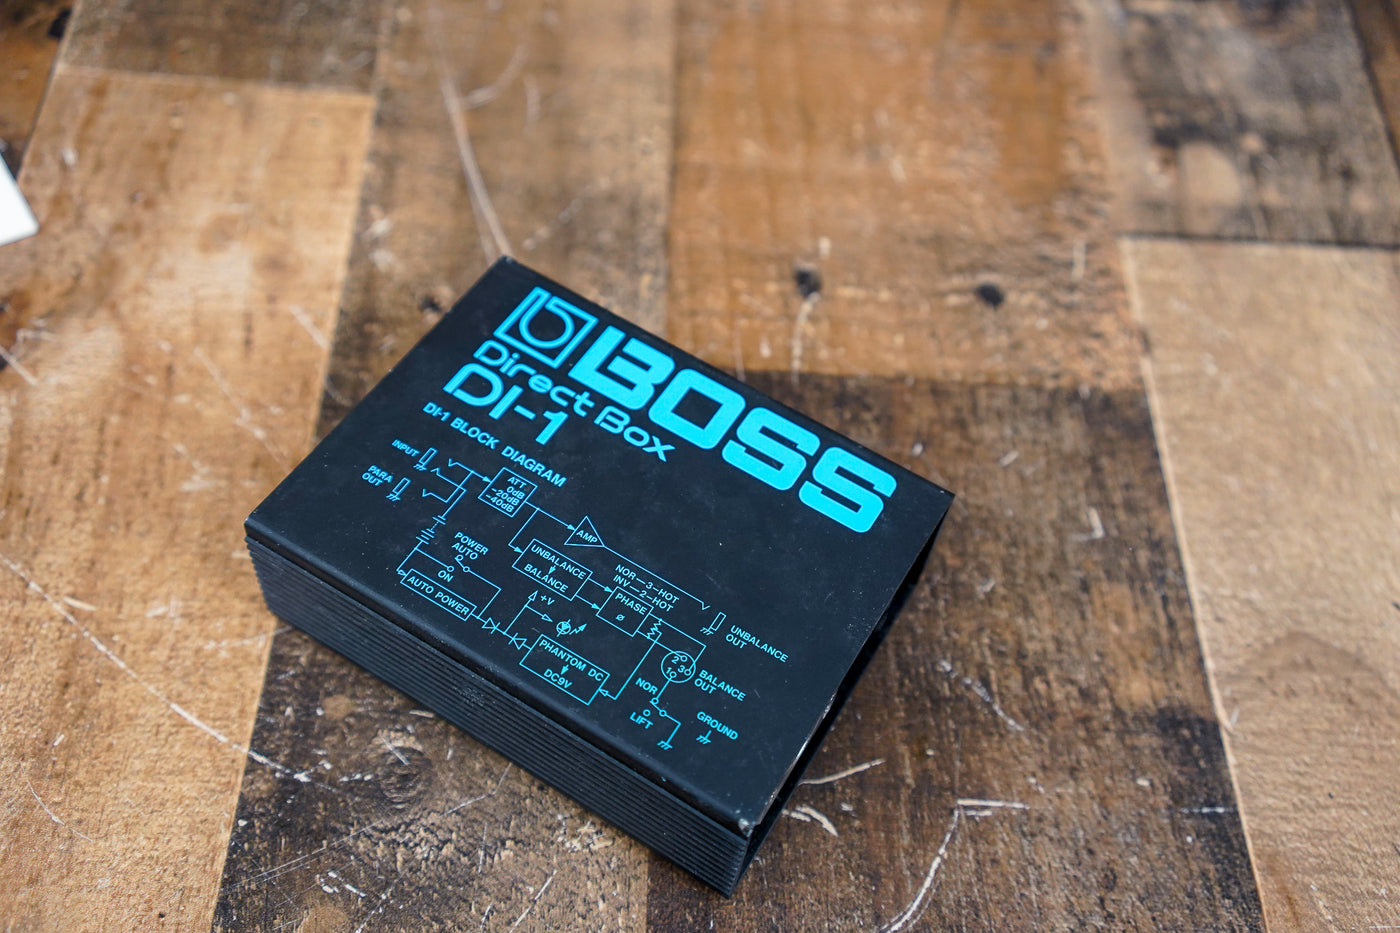 Boss DI-1 Direct Box w/ Box, Manual